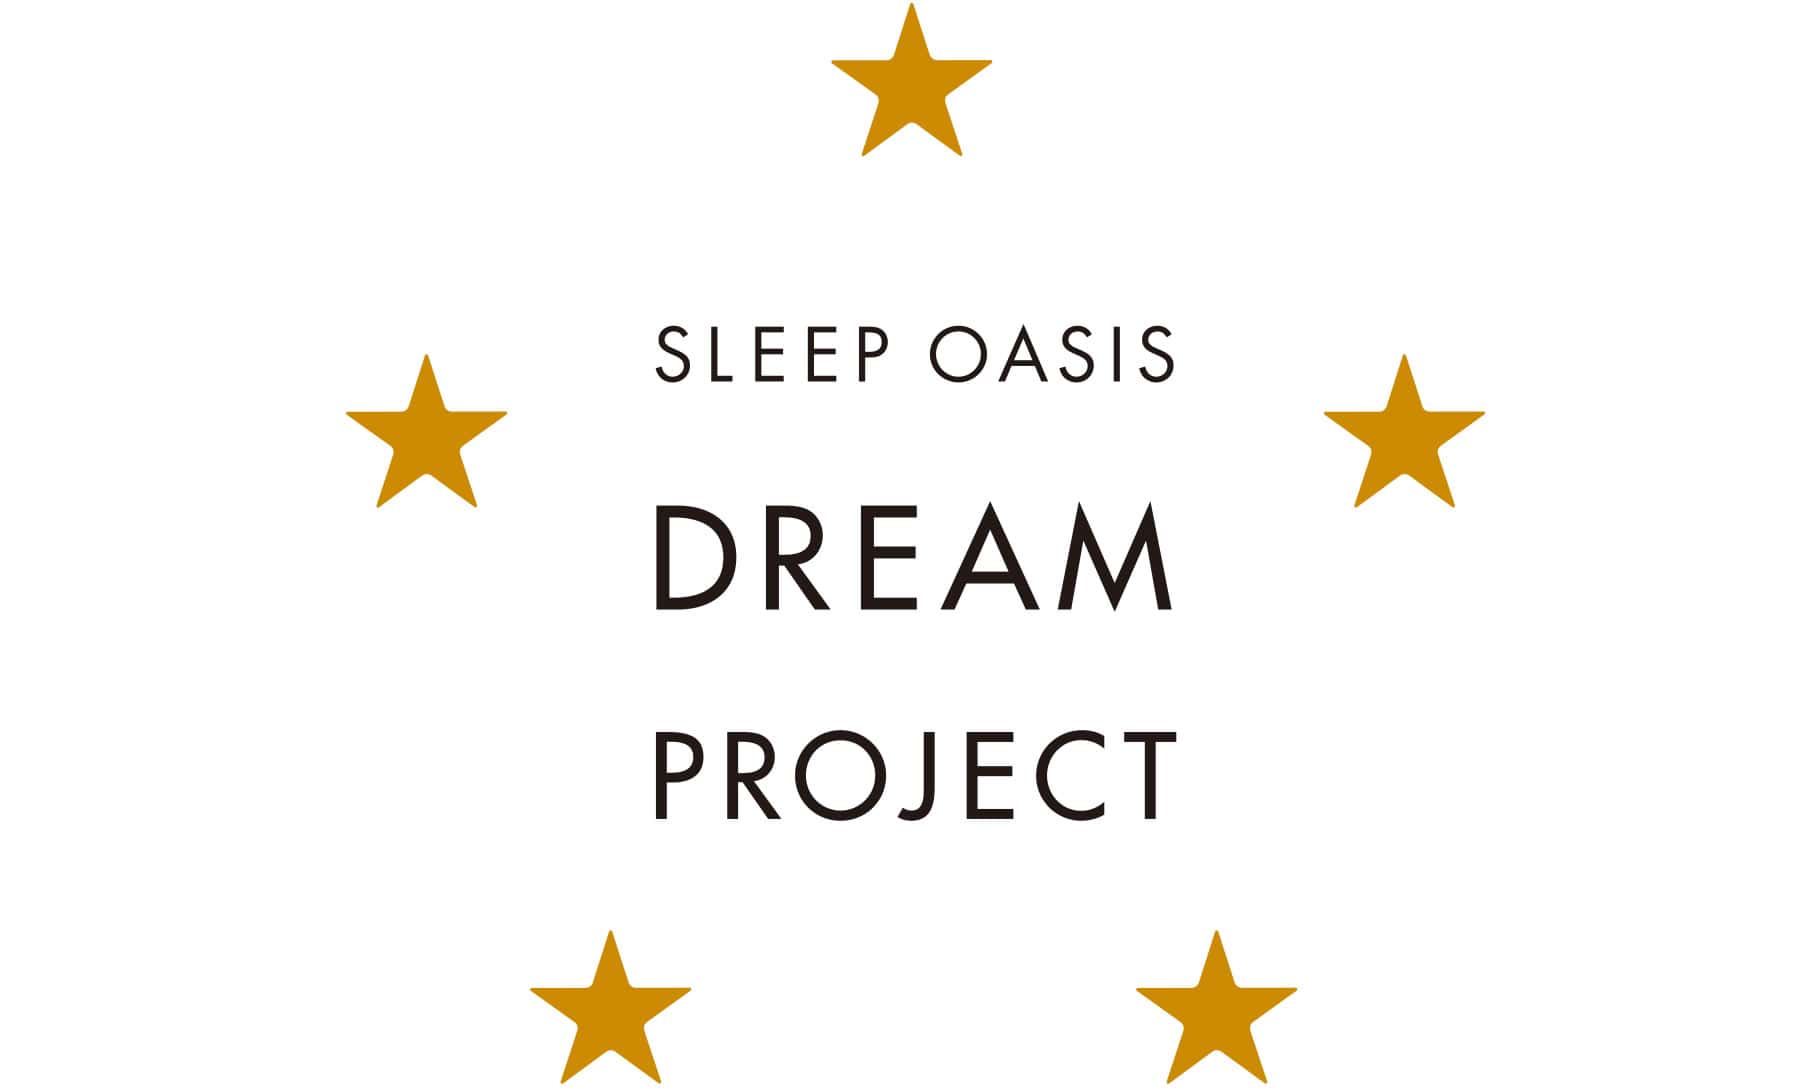 SLEEP OASIS DREAM PROJECT